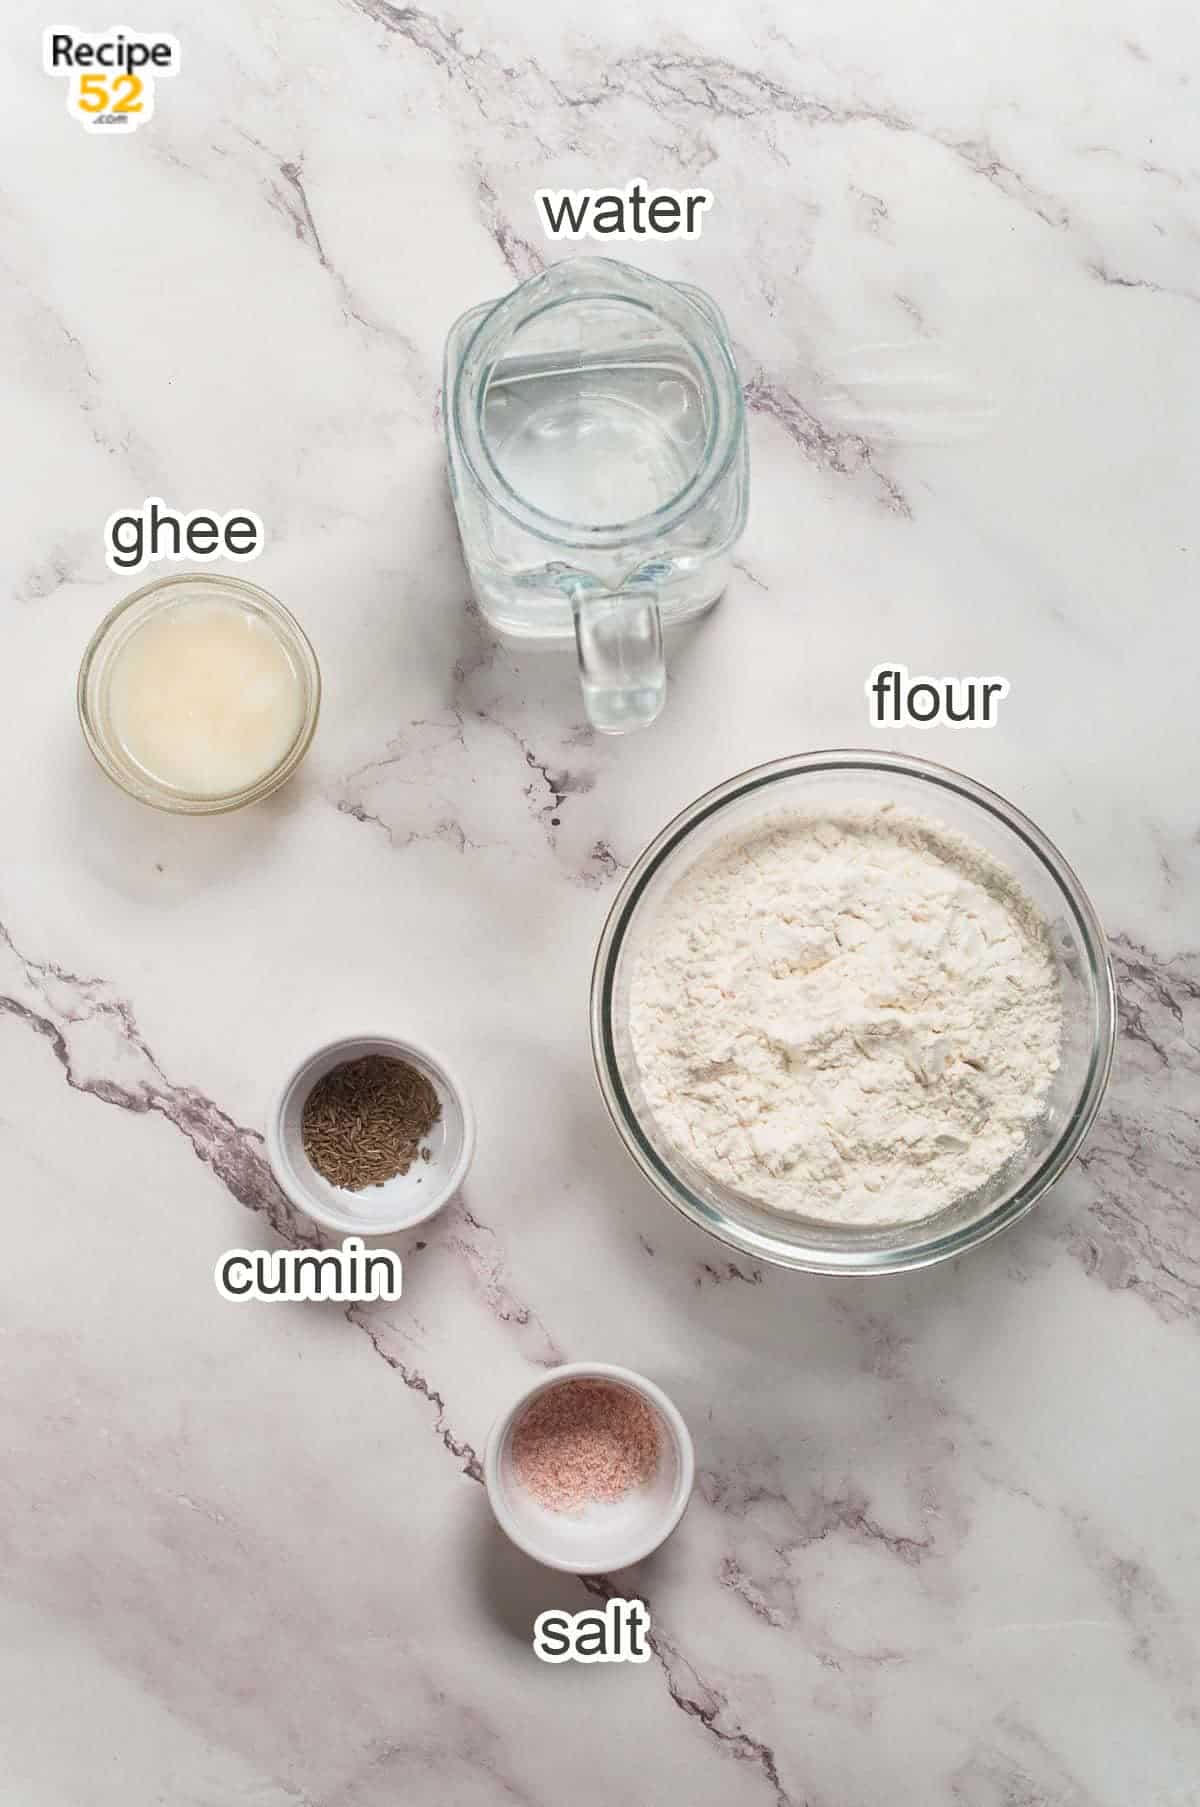 Ingredients to make samosa pastry.